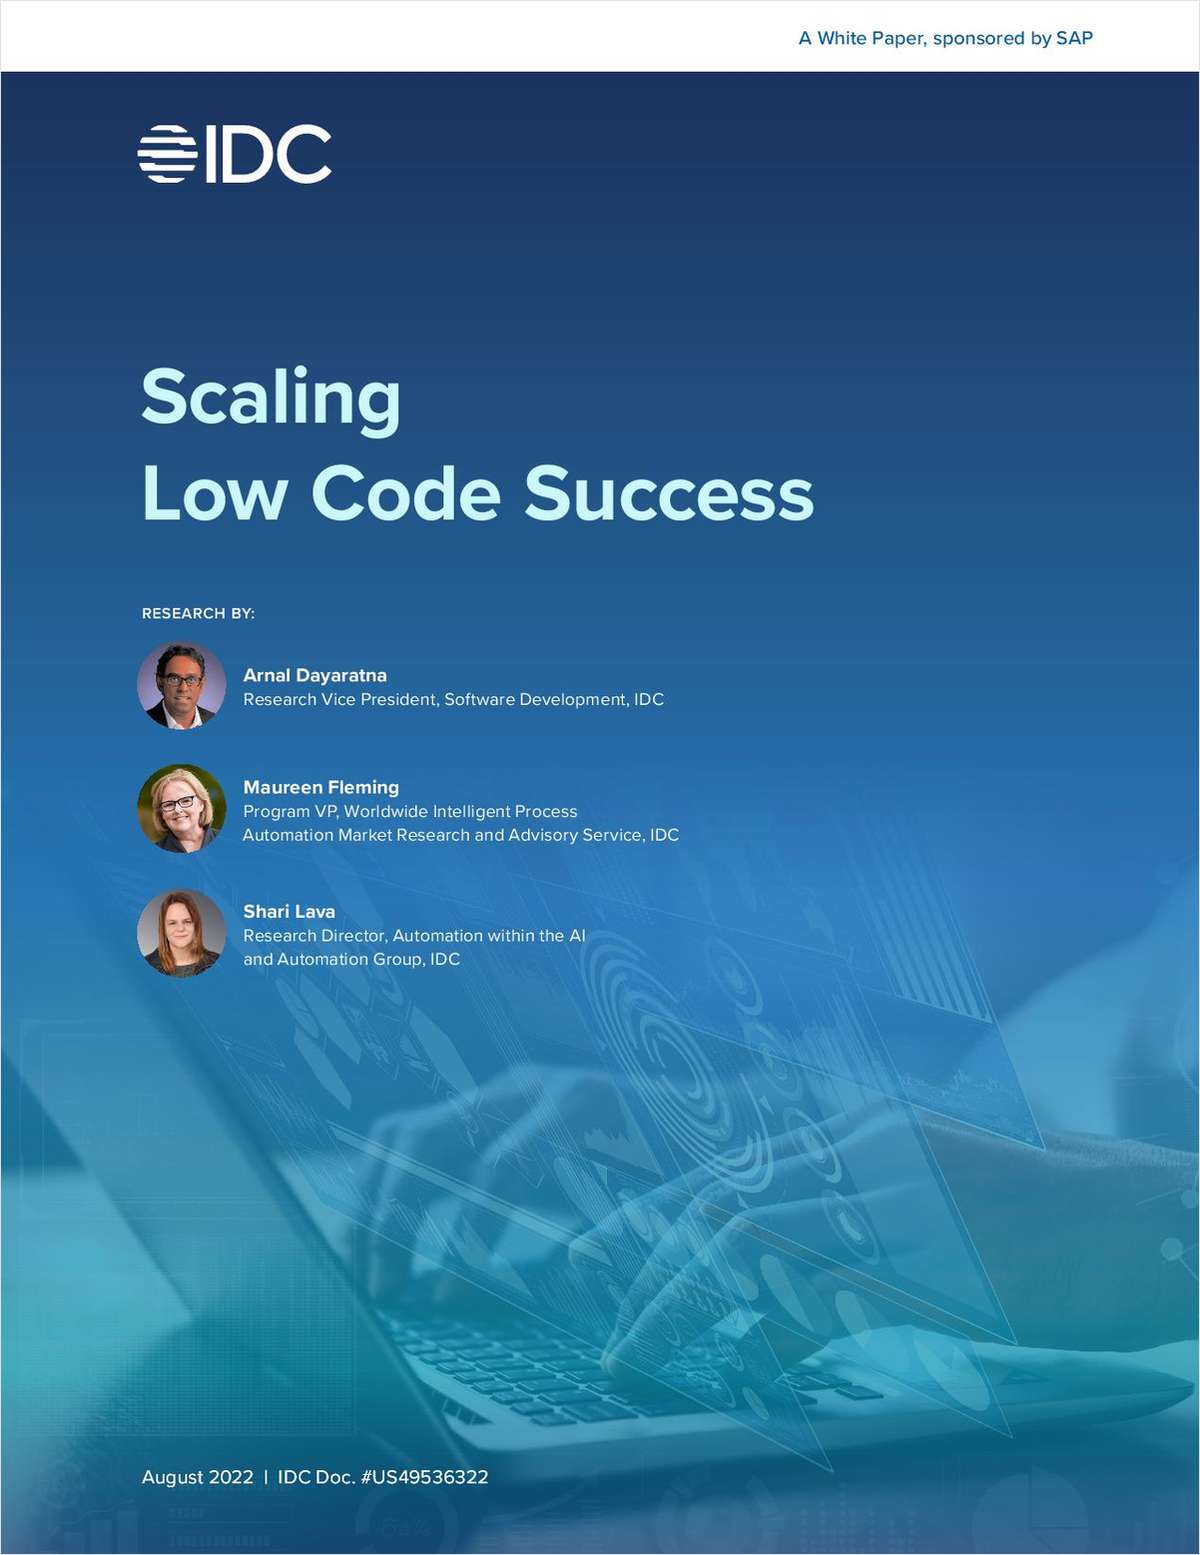 Scaling Low-Code Success